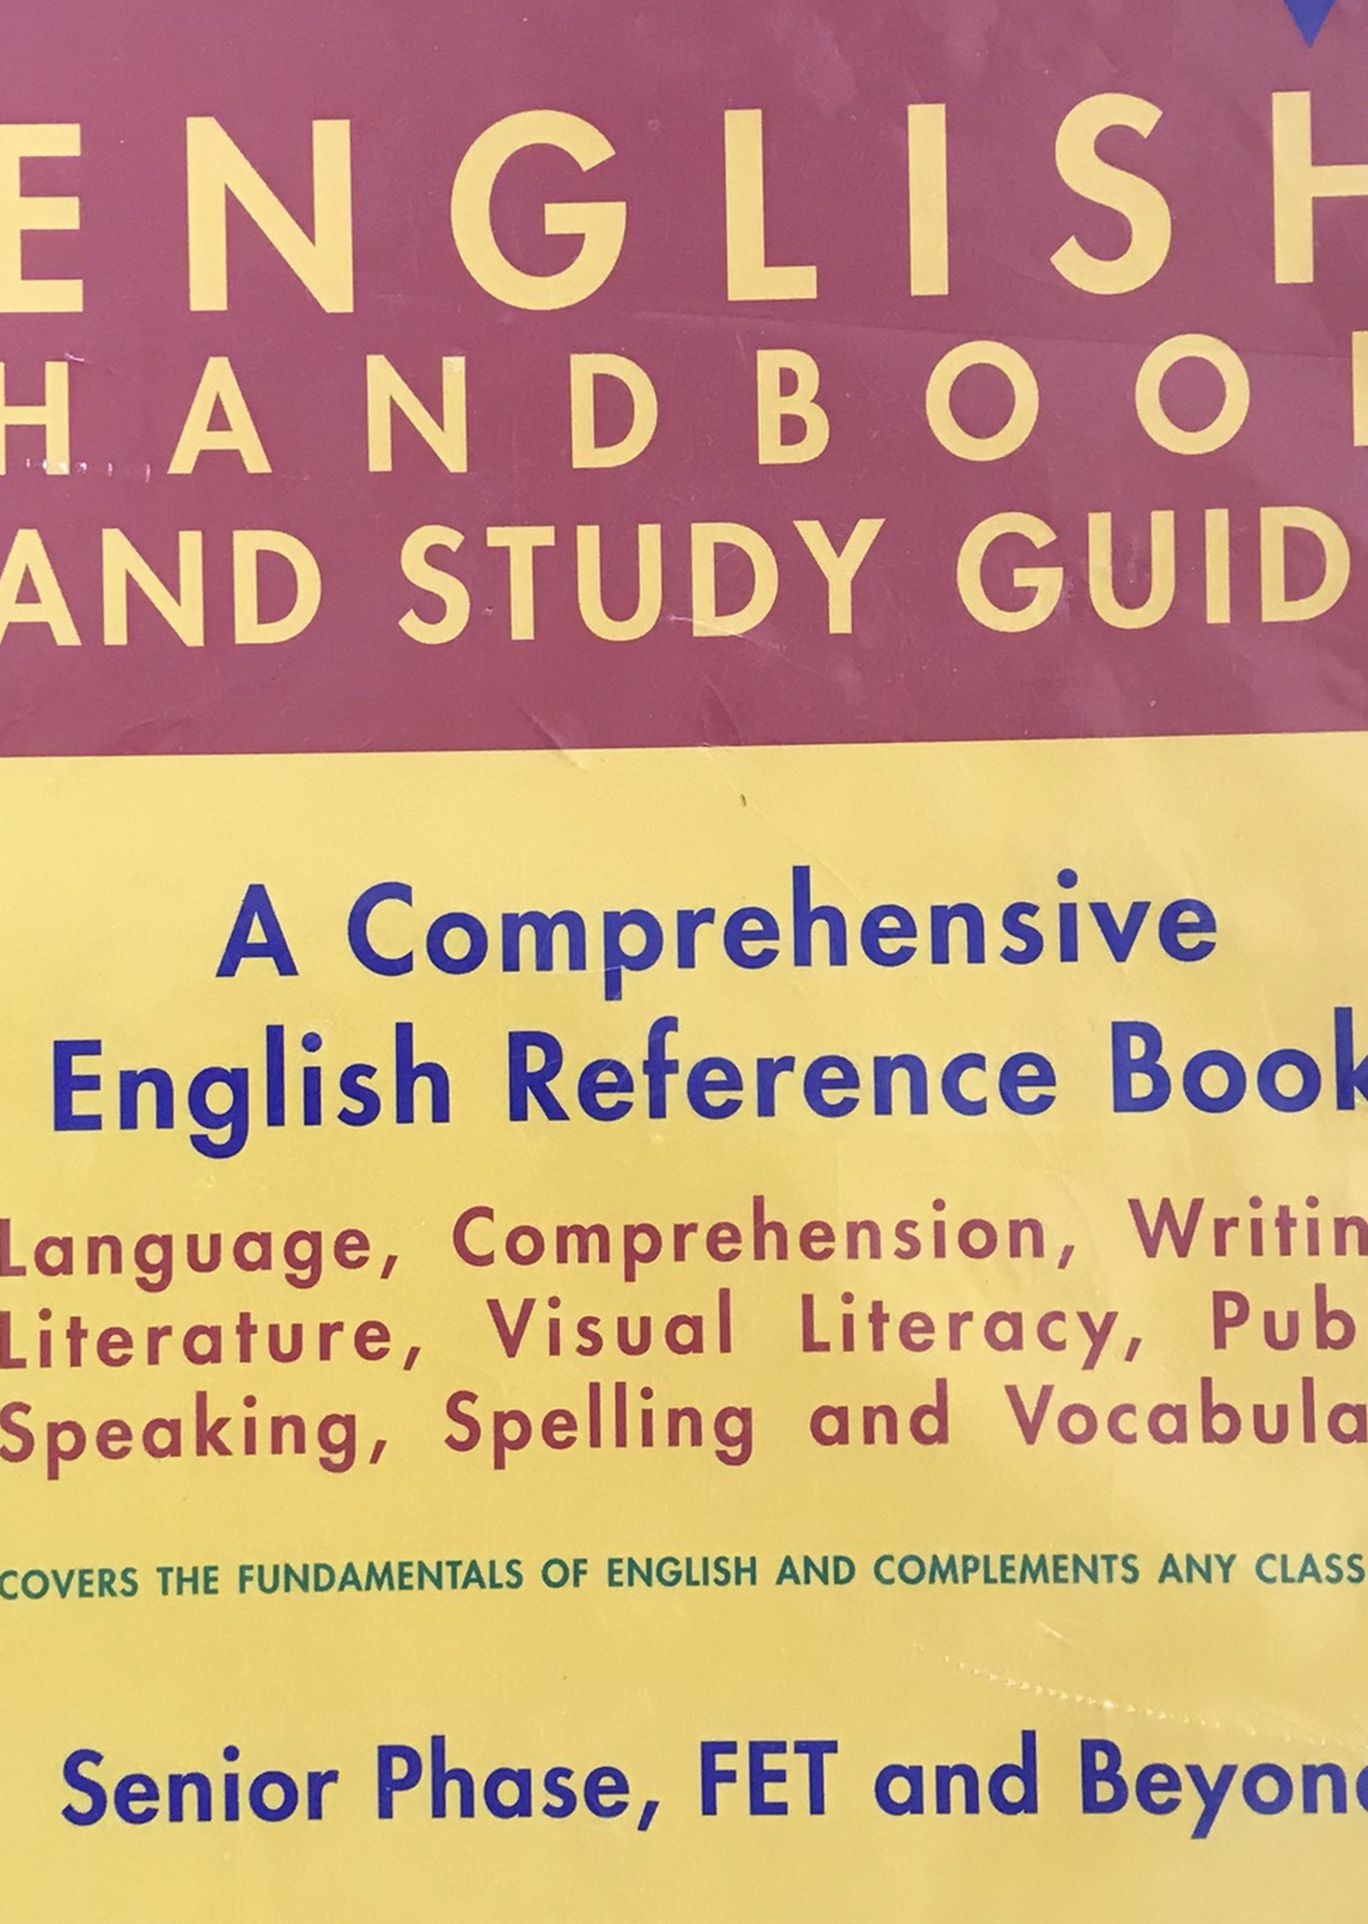 English Handbook And Study Guide